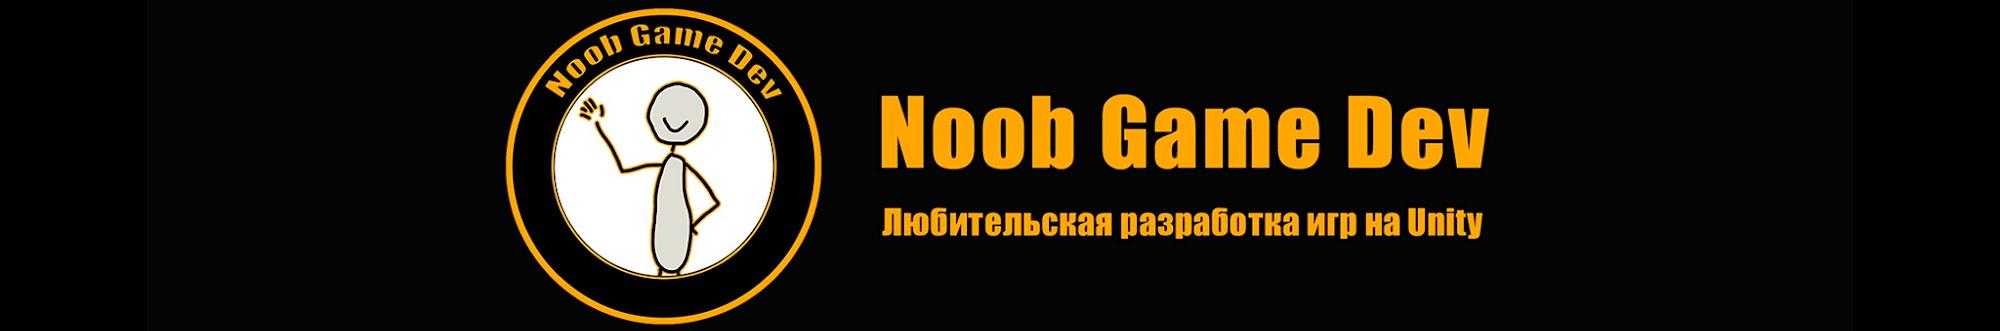 Noob Game Dev